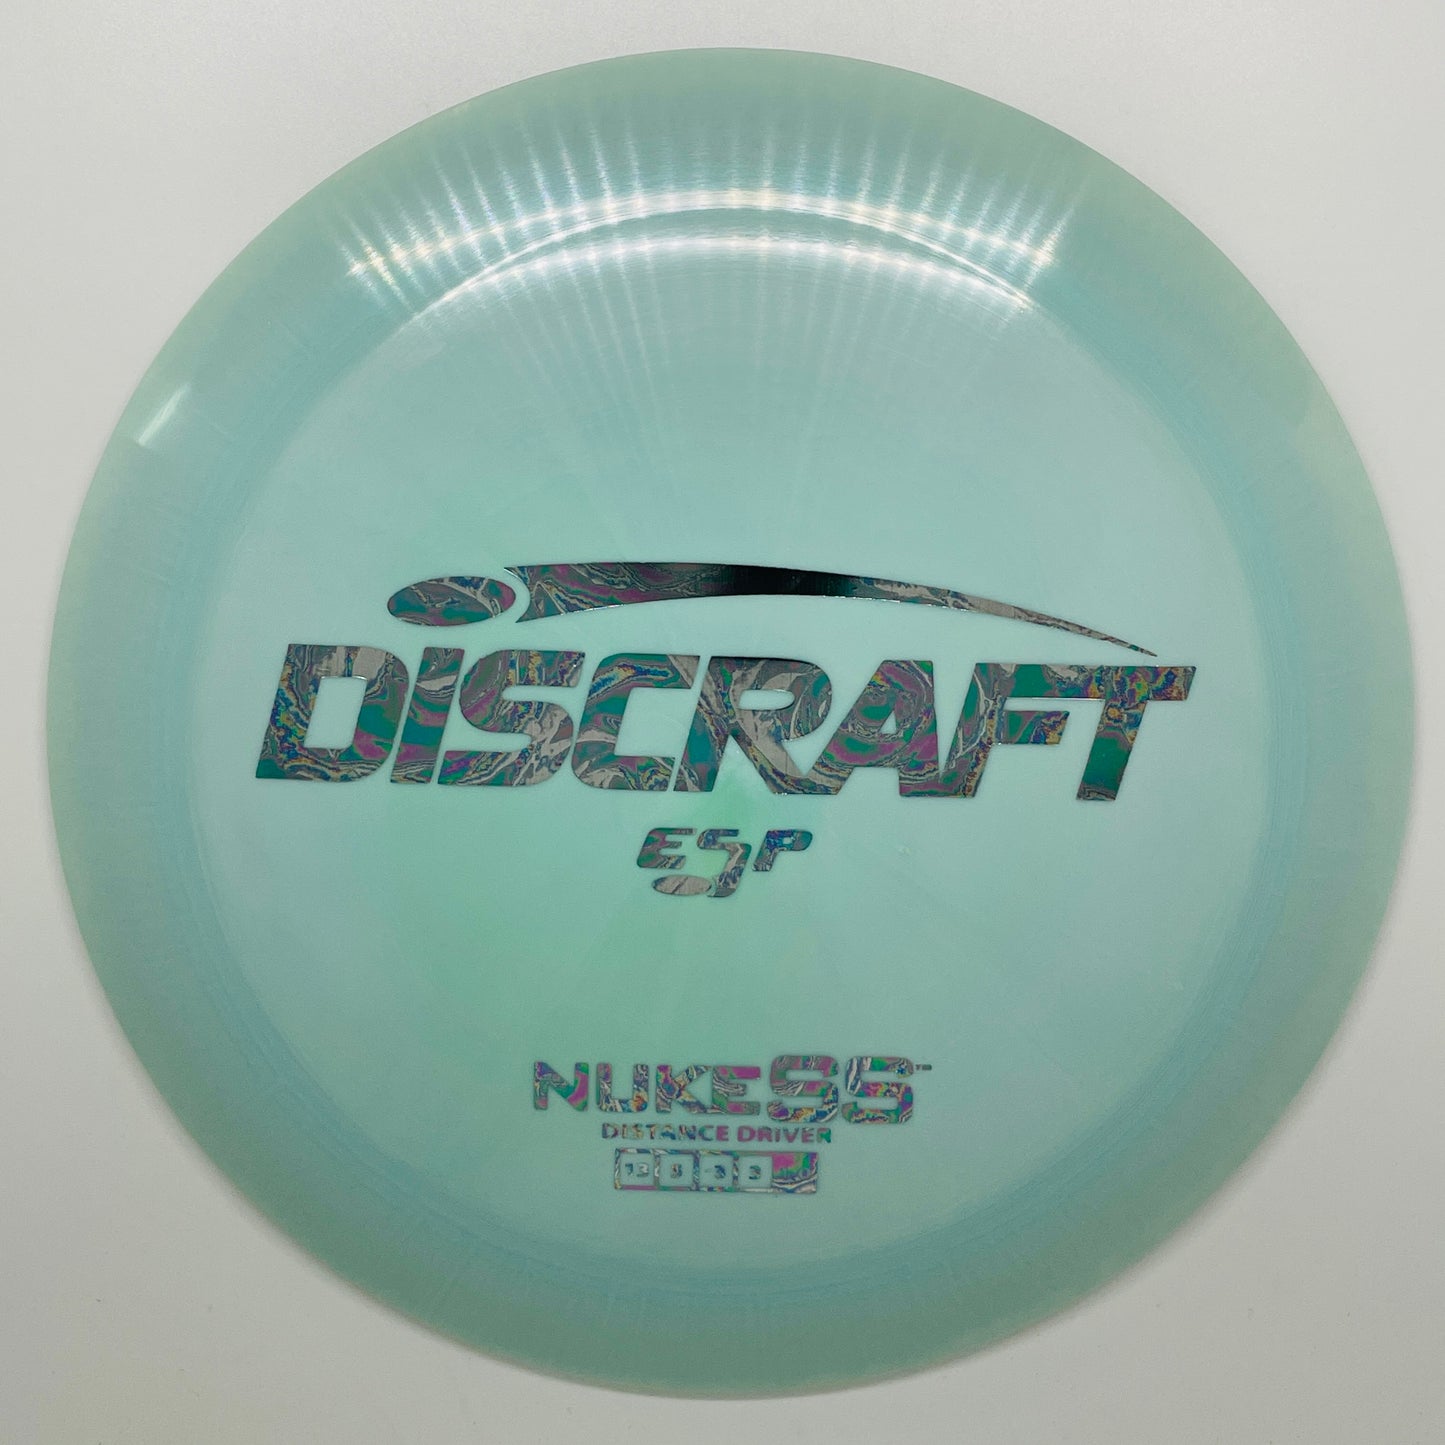 Discraft  Nuke SS ESP - Distance Driver